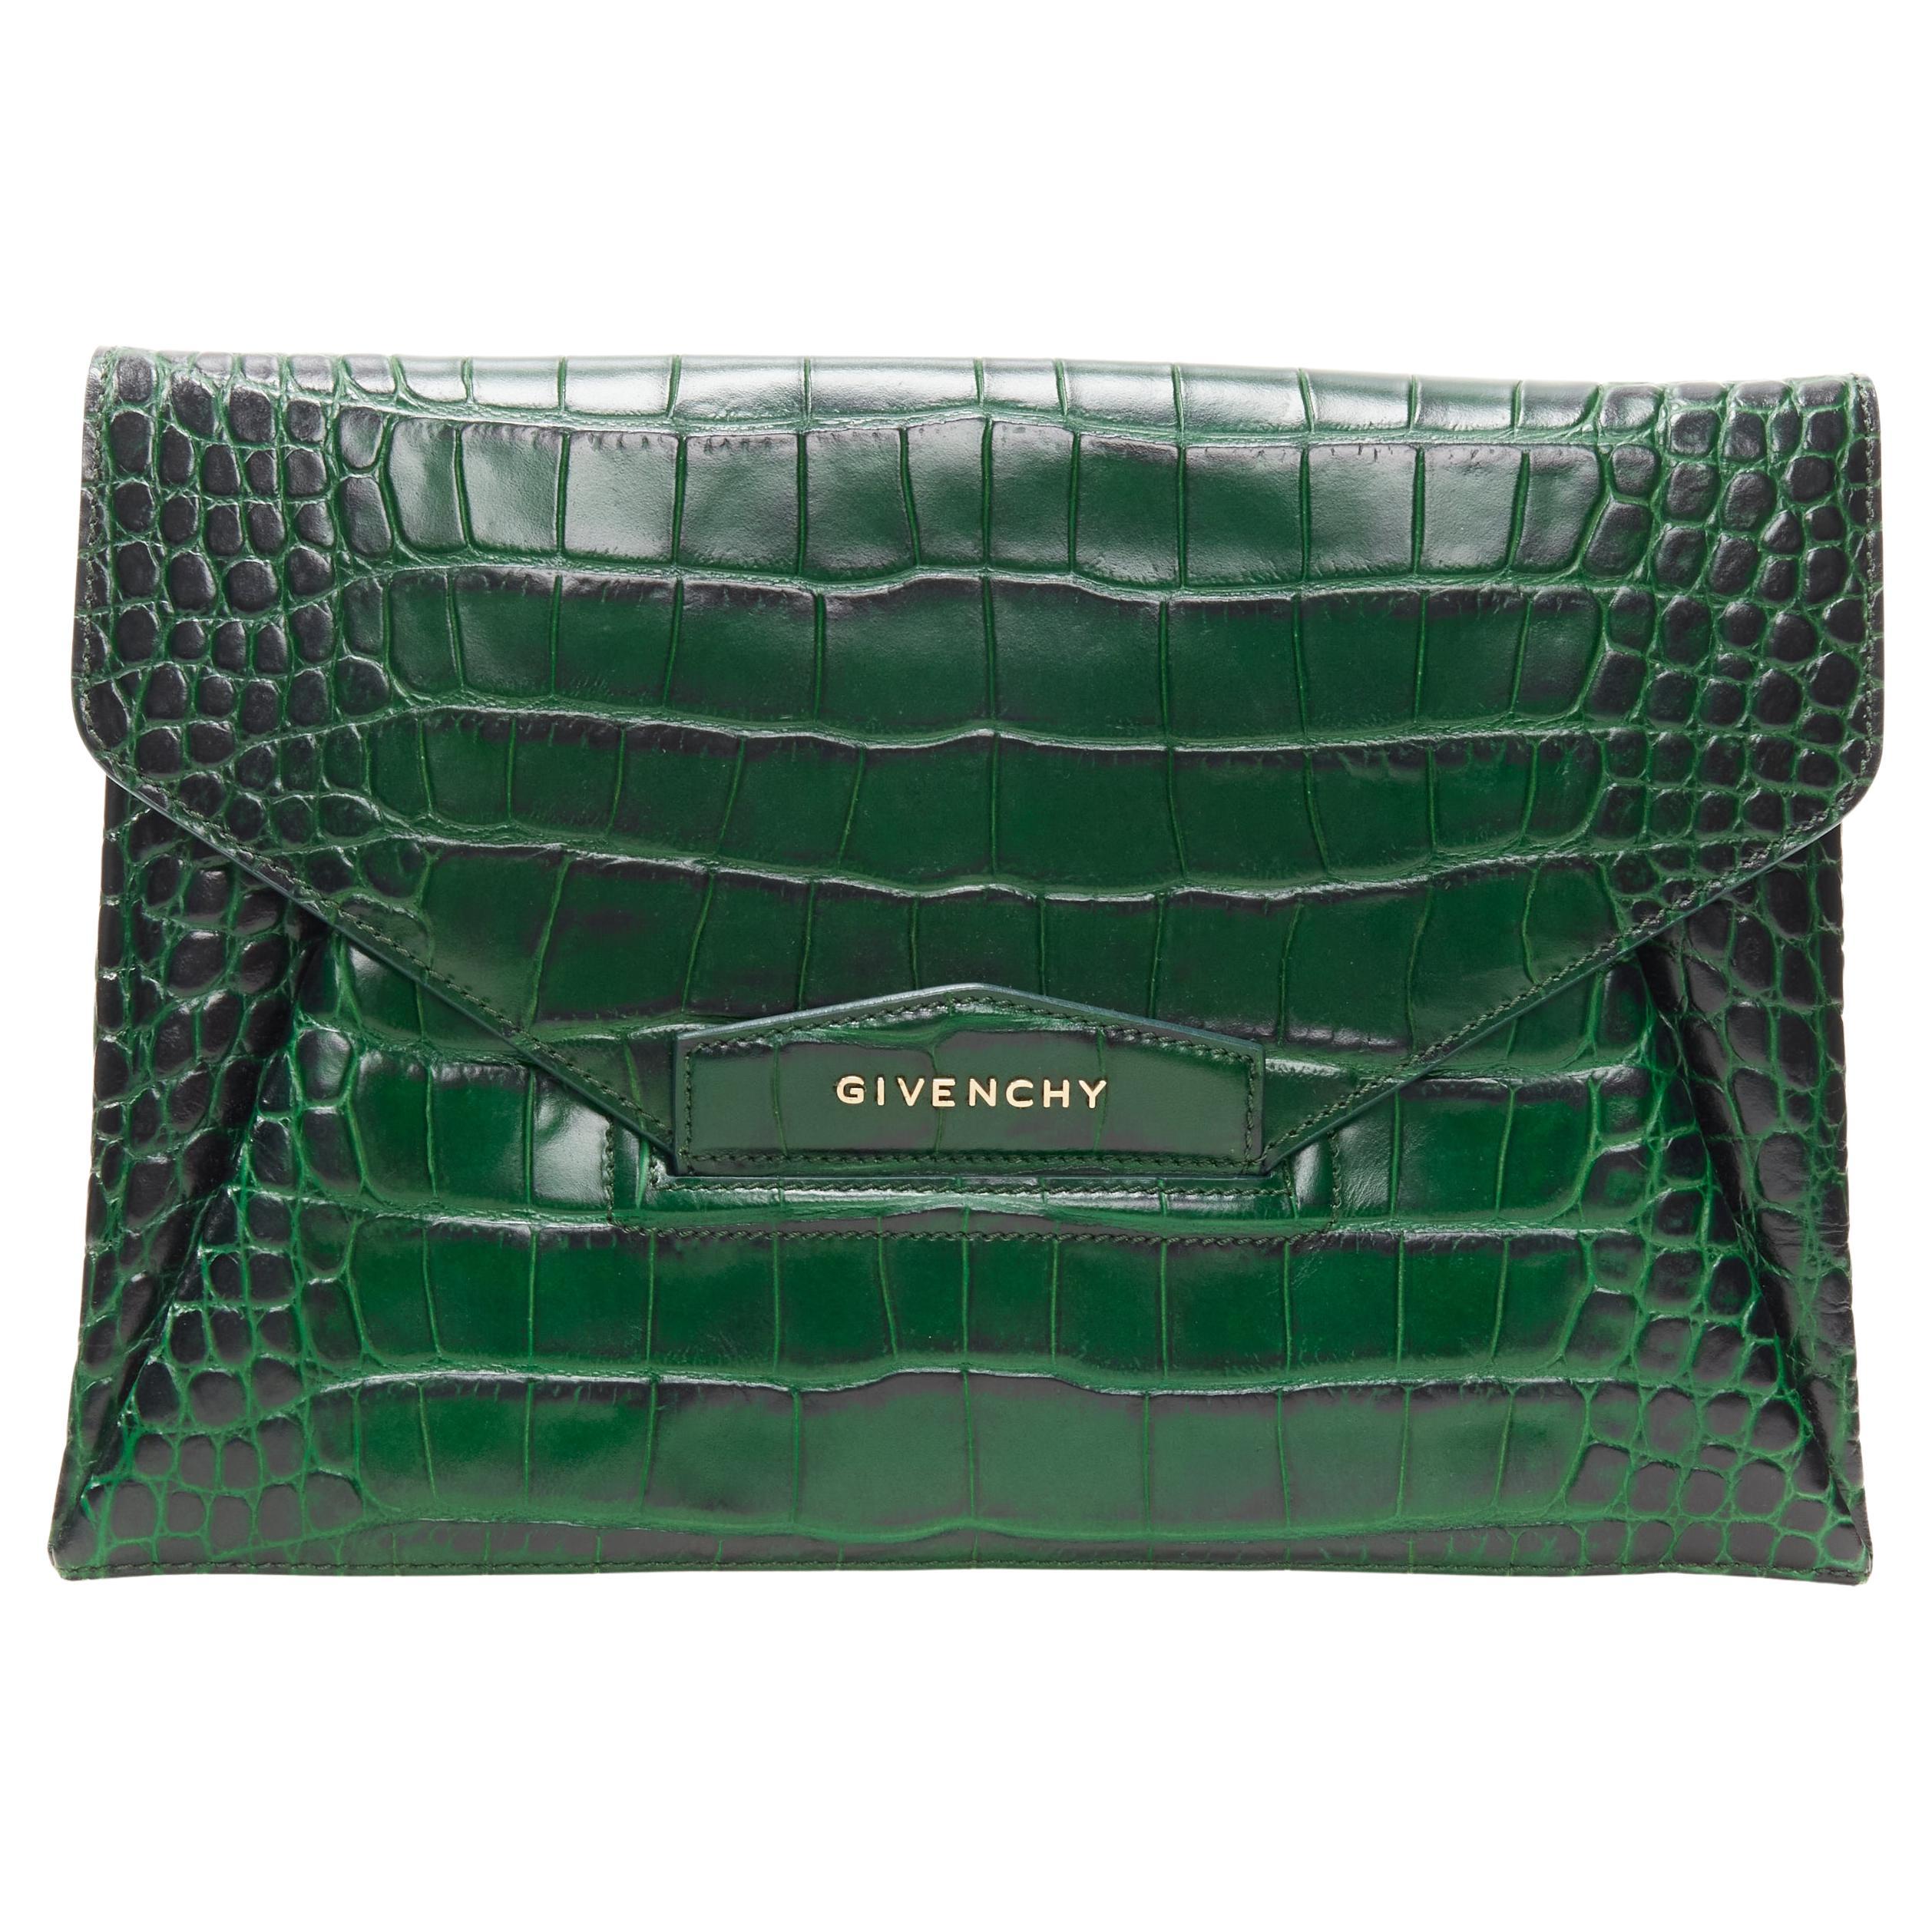 GIVENCHY Antigona green mock croc leather flap envelope clutch bag